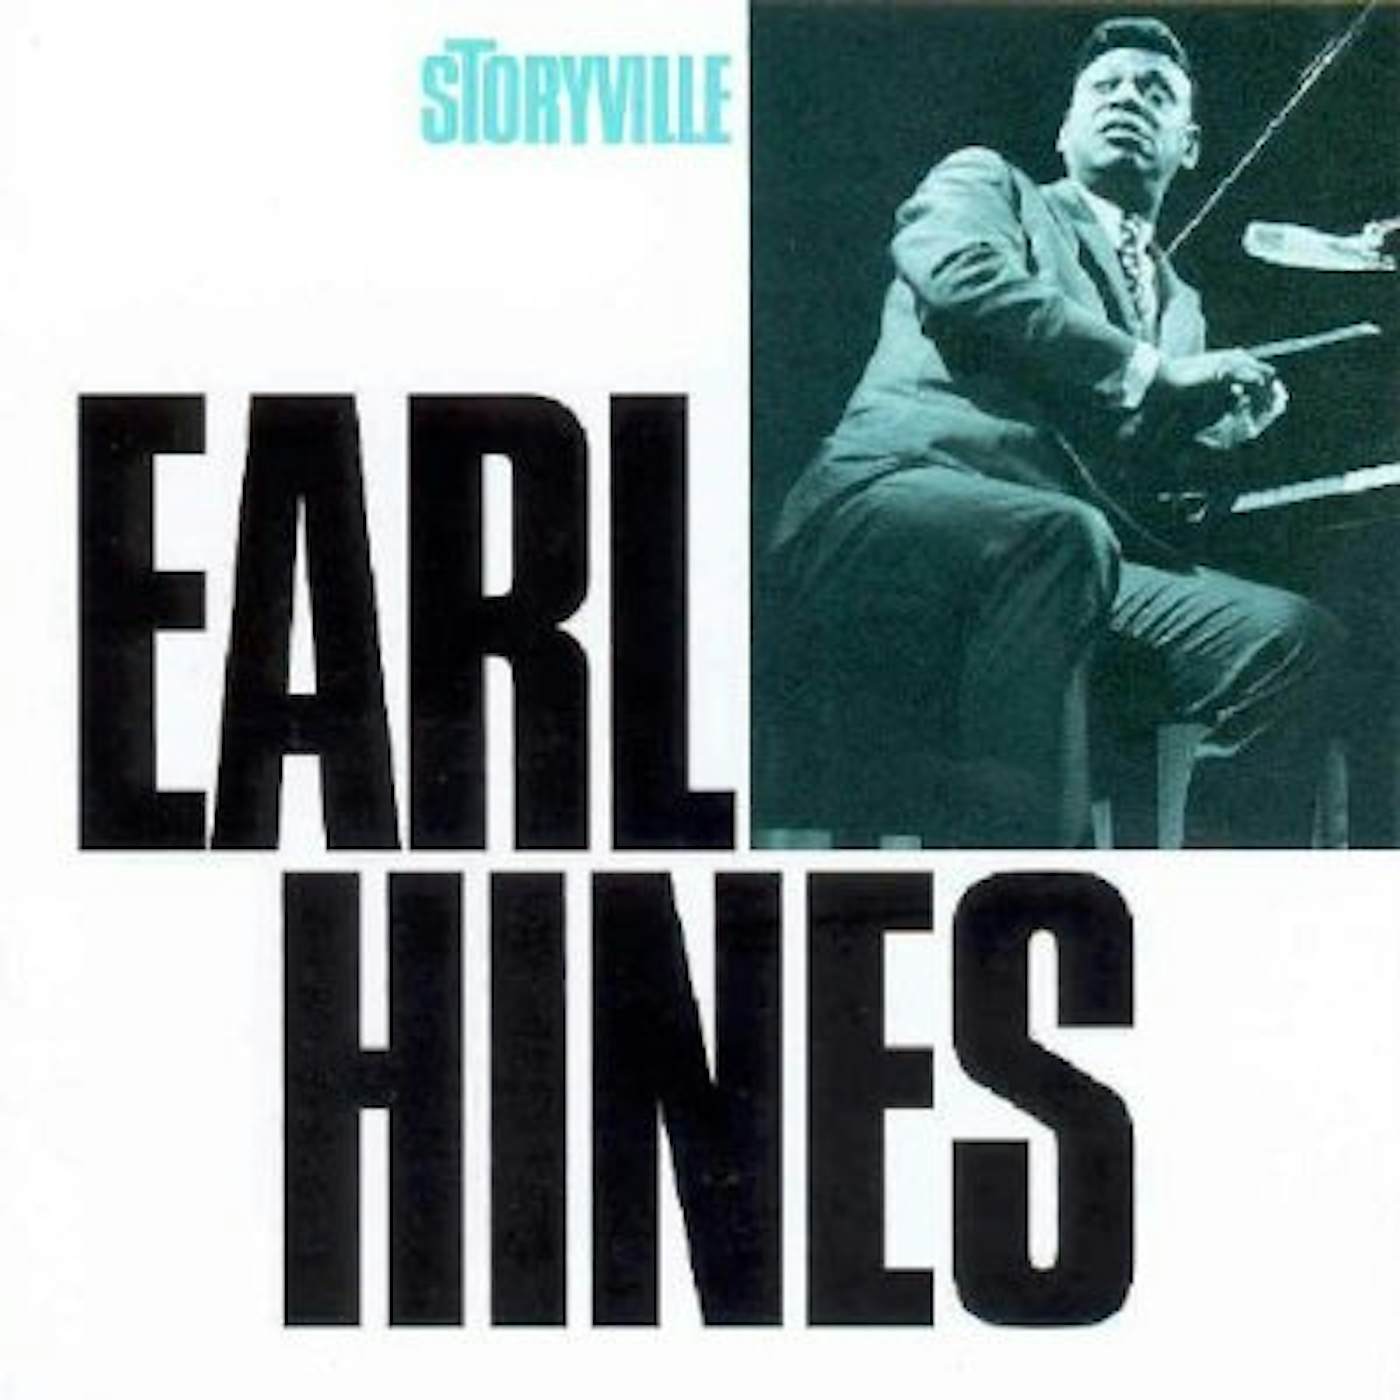 Earl Hines MASTERS OF JAZZ CD